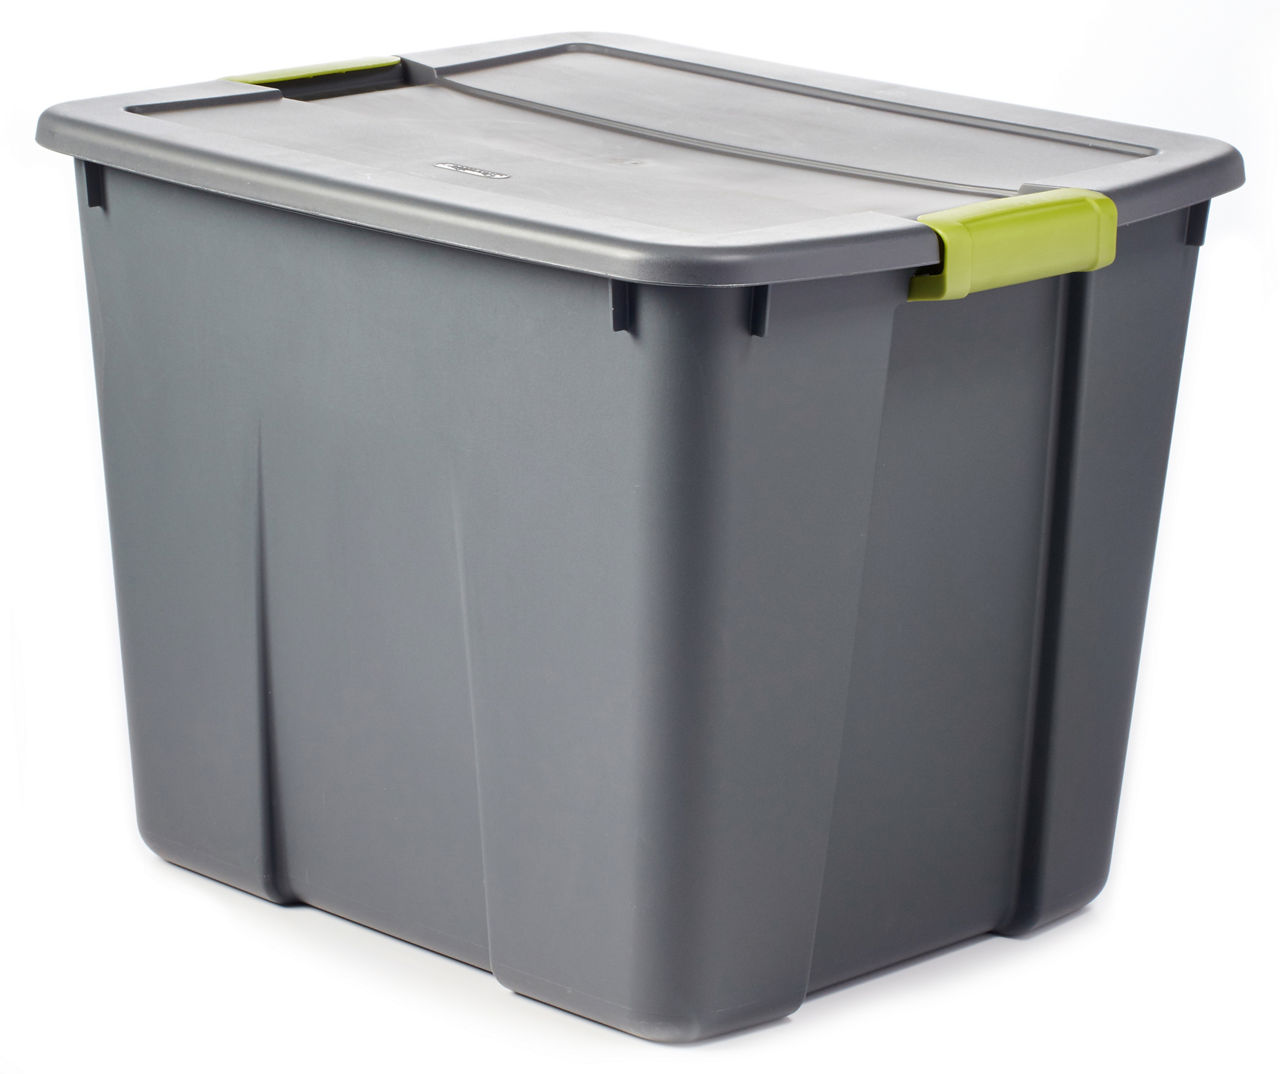 Sterilite 20 Gallon Plastic Storage Container Box Cement Gray/Blue (8 Pack)  - Bed Bath & Beyond - 36002601